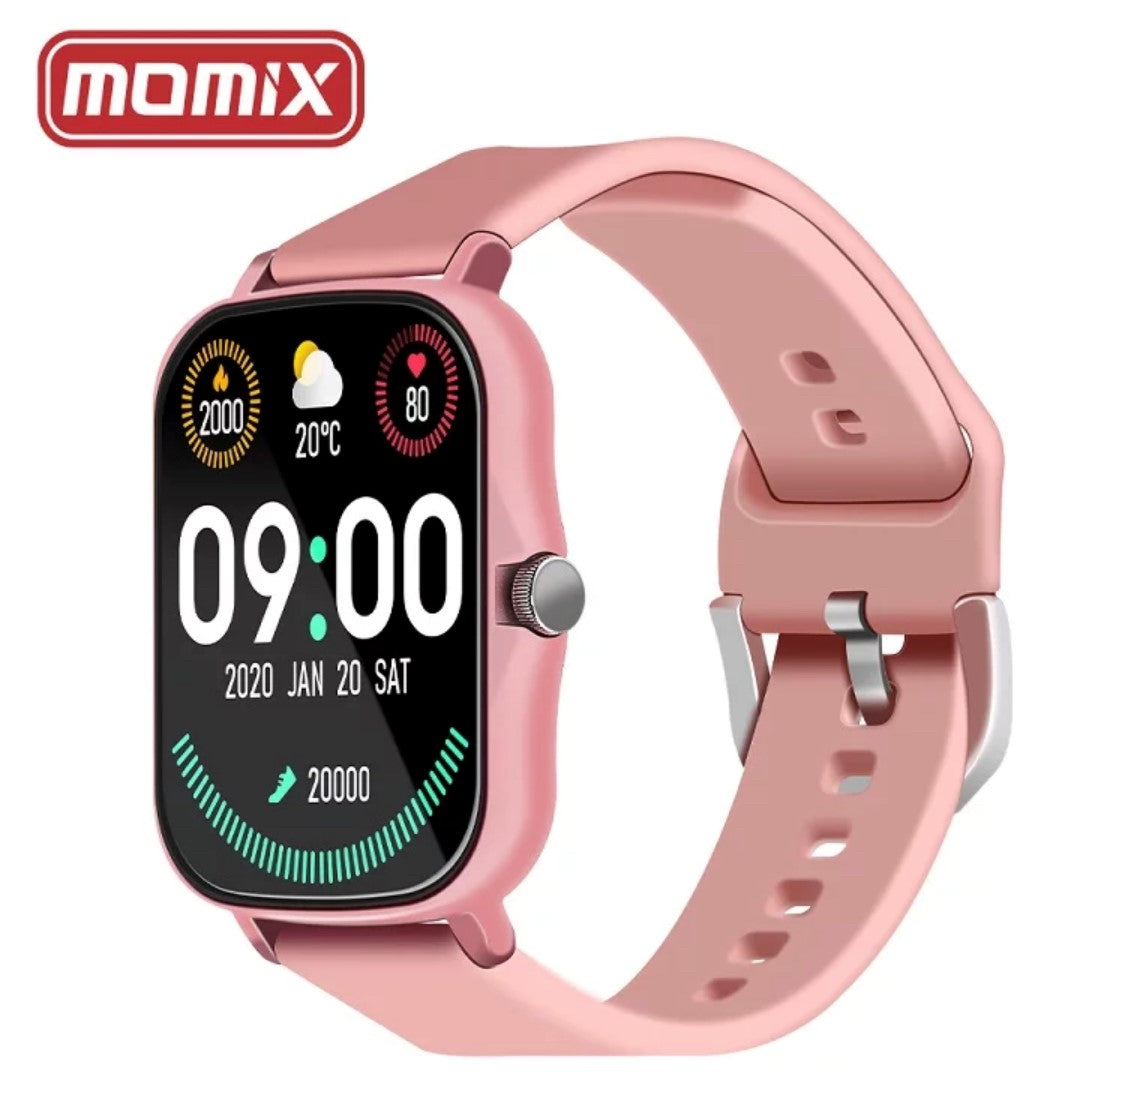 MOMIX M2  Black Smart Watch South Africa 